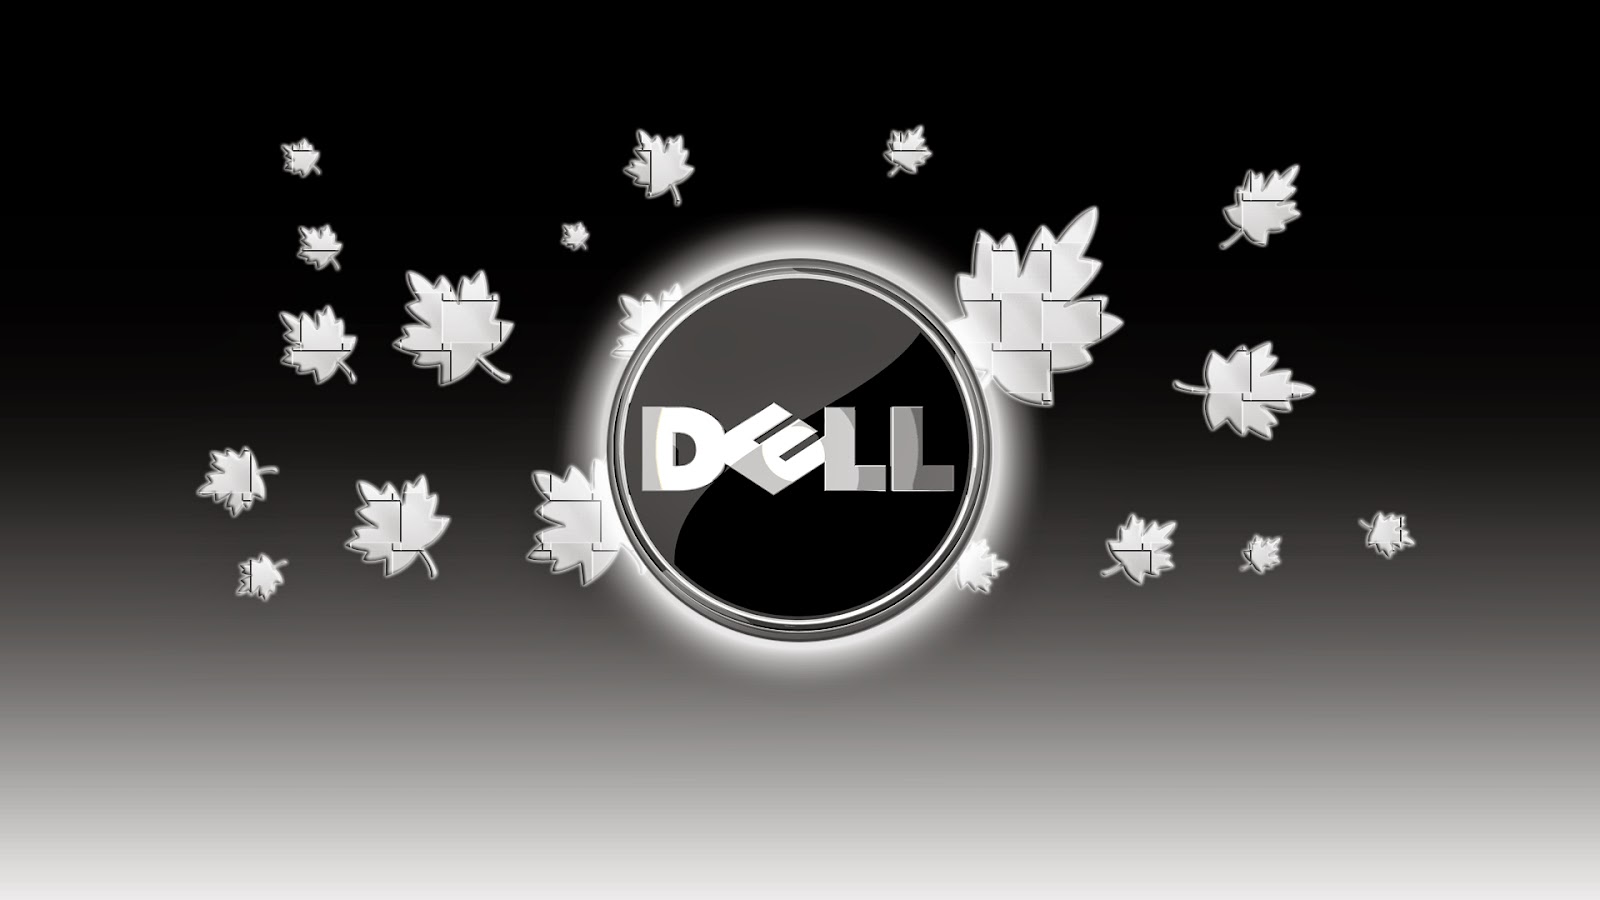 Wallpaper: Dell HD Wallpaper Free Download For PC Desktop